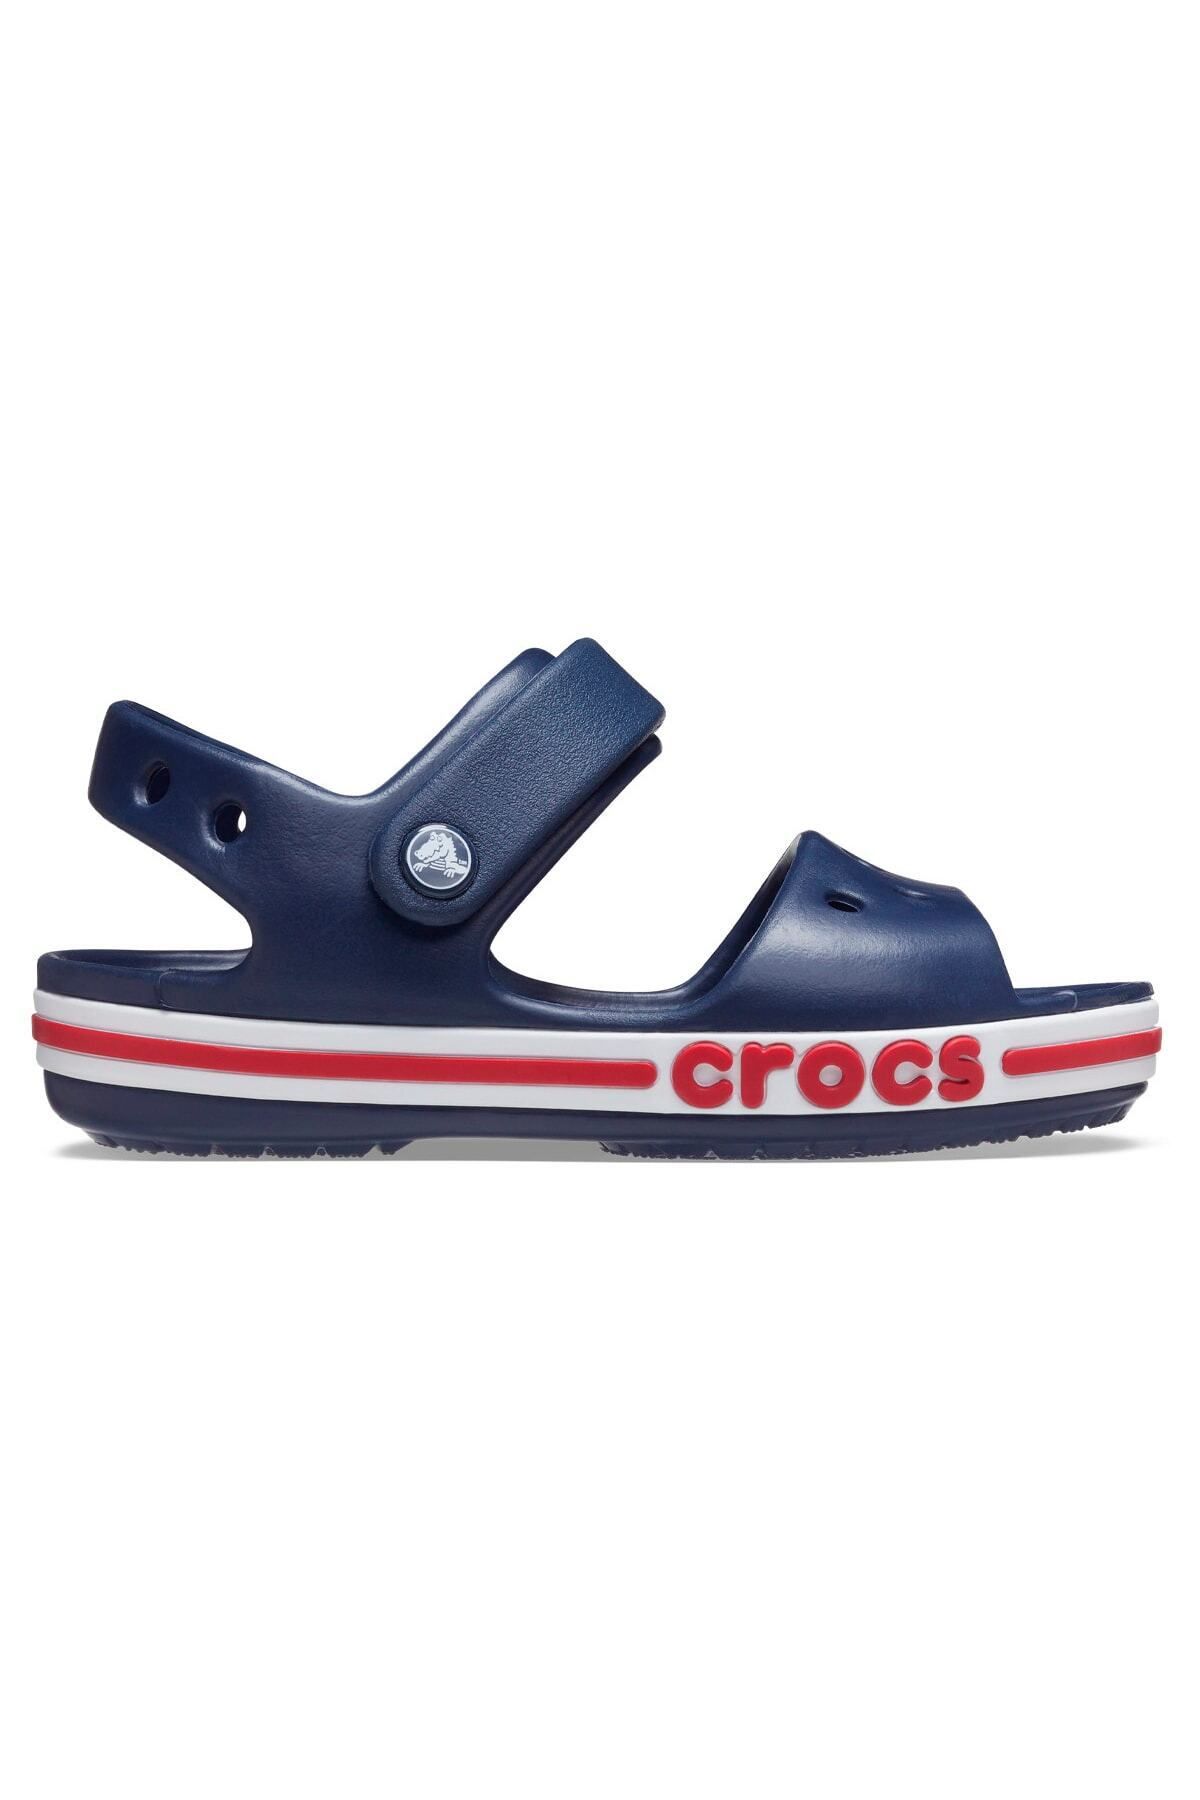 Crocs Navy/Pepper Çocuk Terlik Bayaband Sandal K